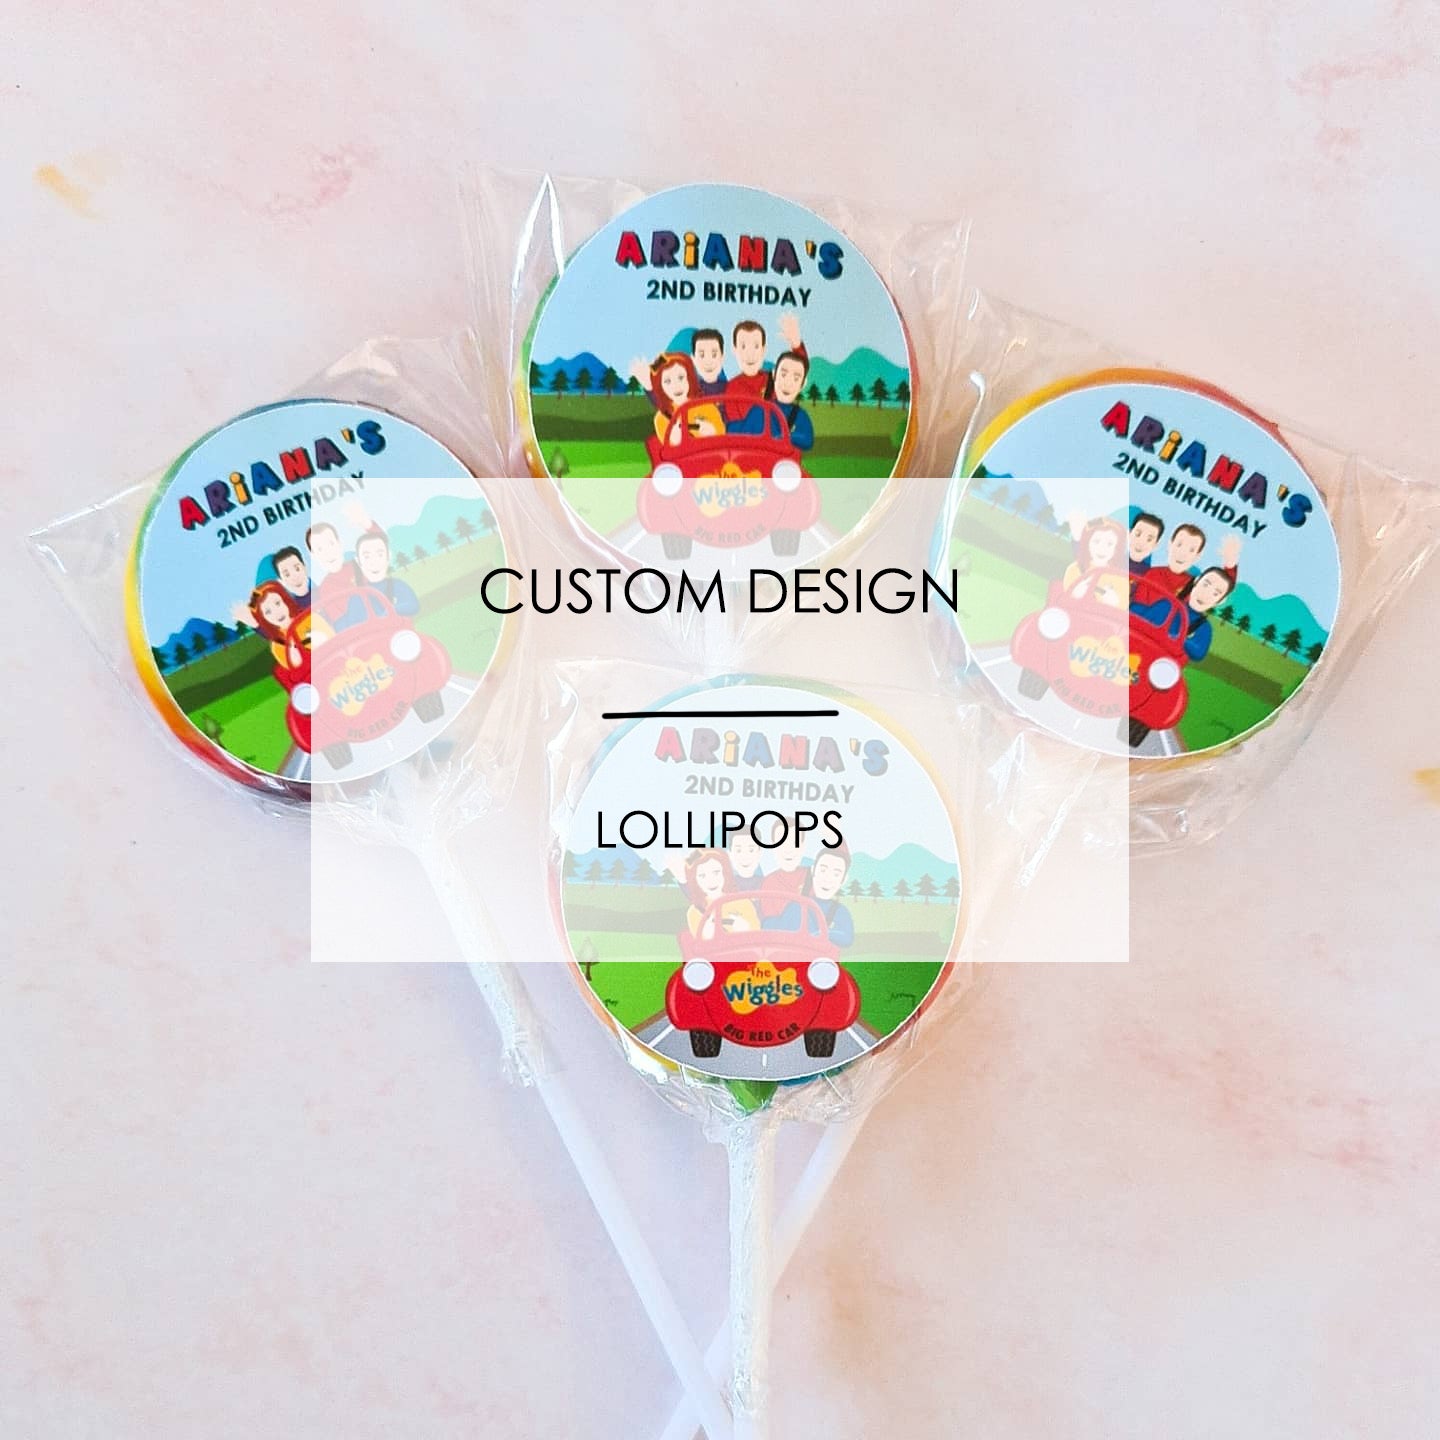 Lollipop (each) - Custom Design